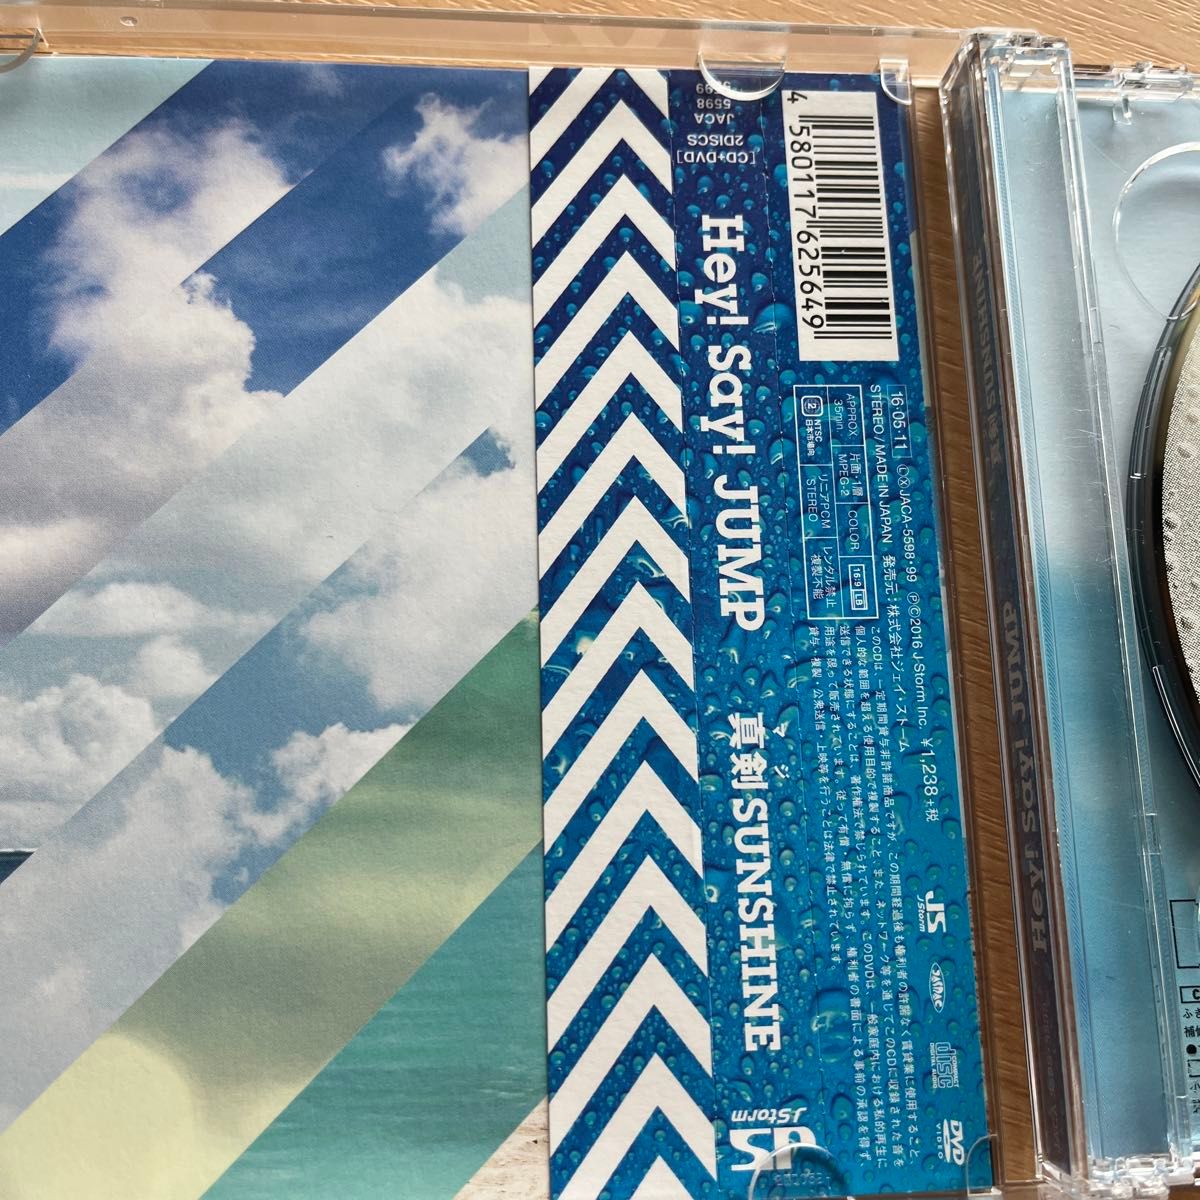 CD DVD 帯付真剣sunshine 初回限定版